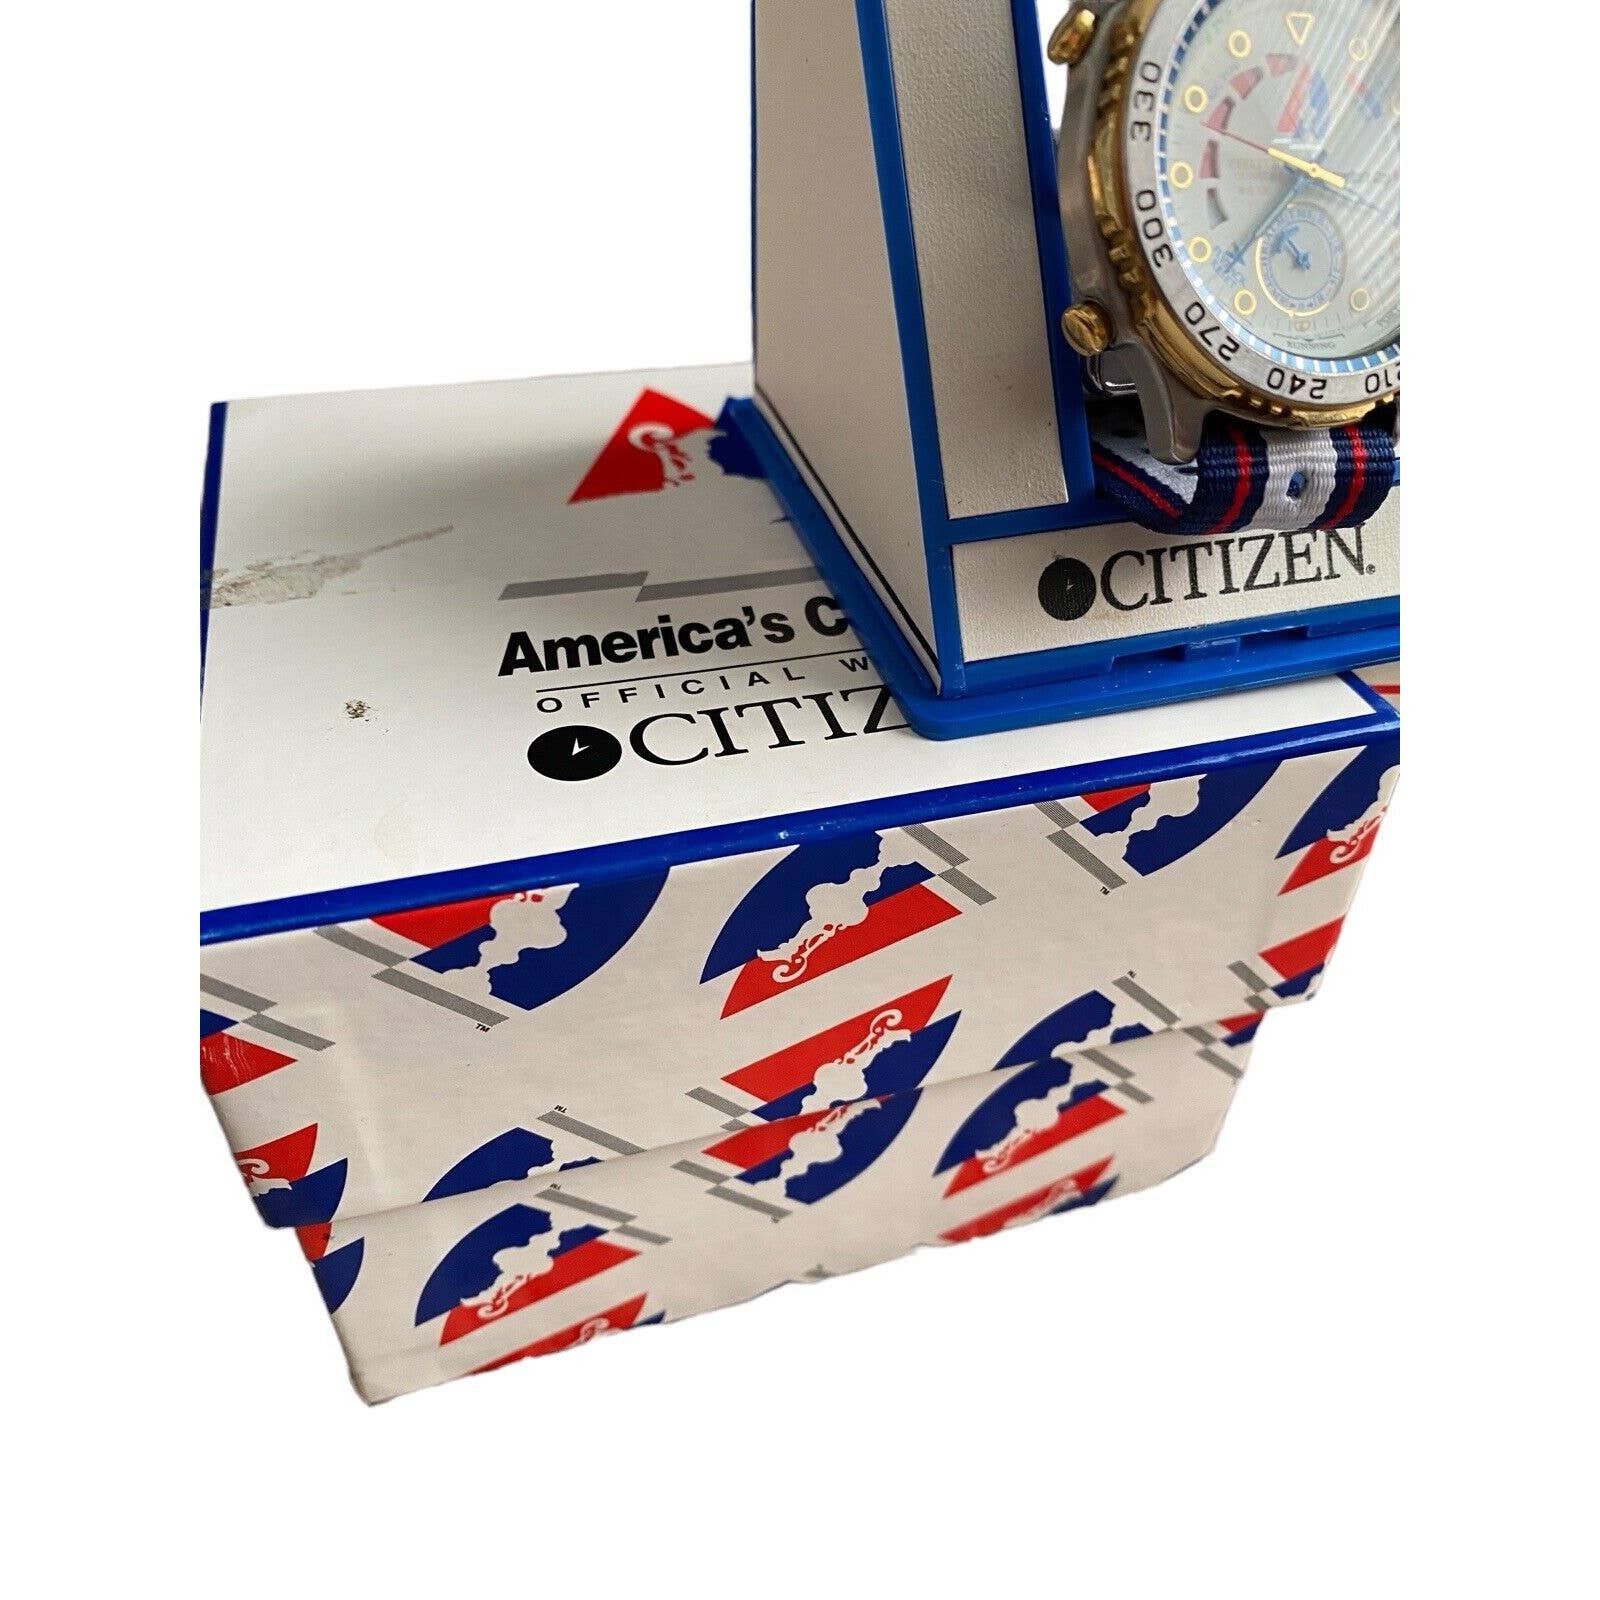 Citizen Citizen Yacht 1992 Americas Cup Watch Chronograph Race Size ONE SIZE - 7 Thumbnail